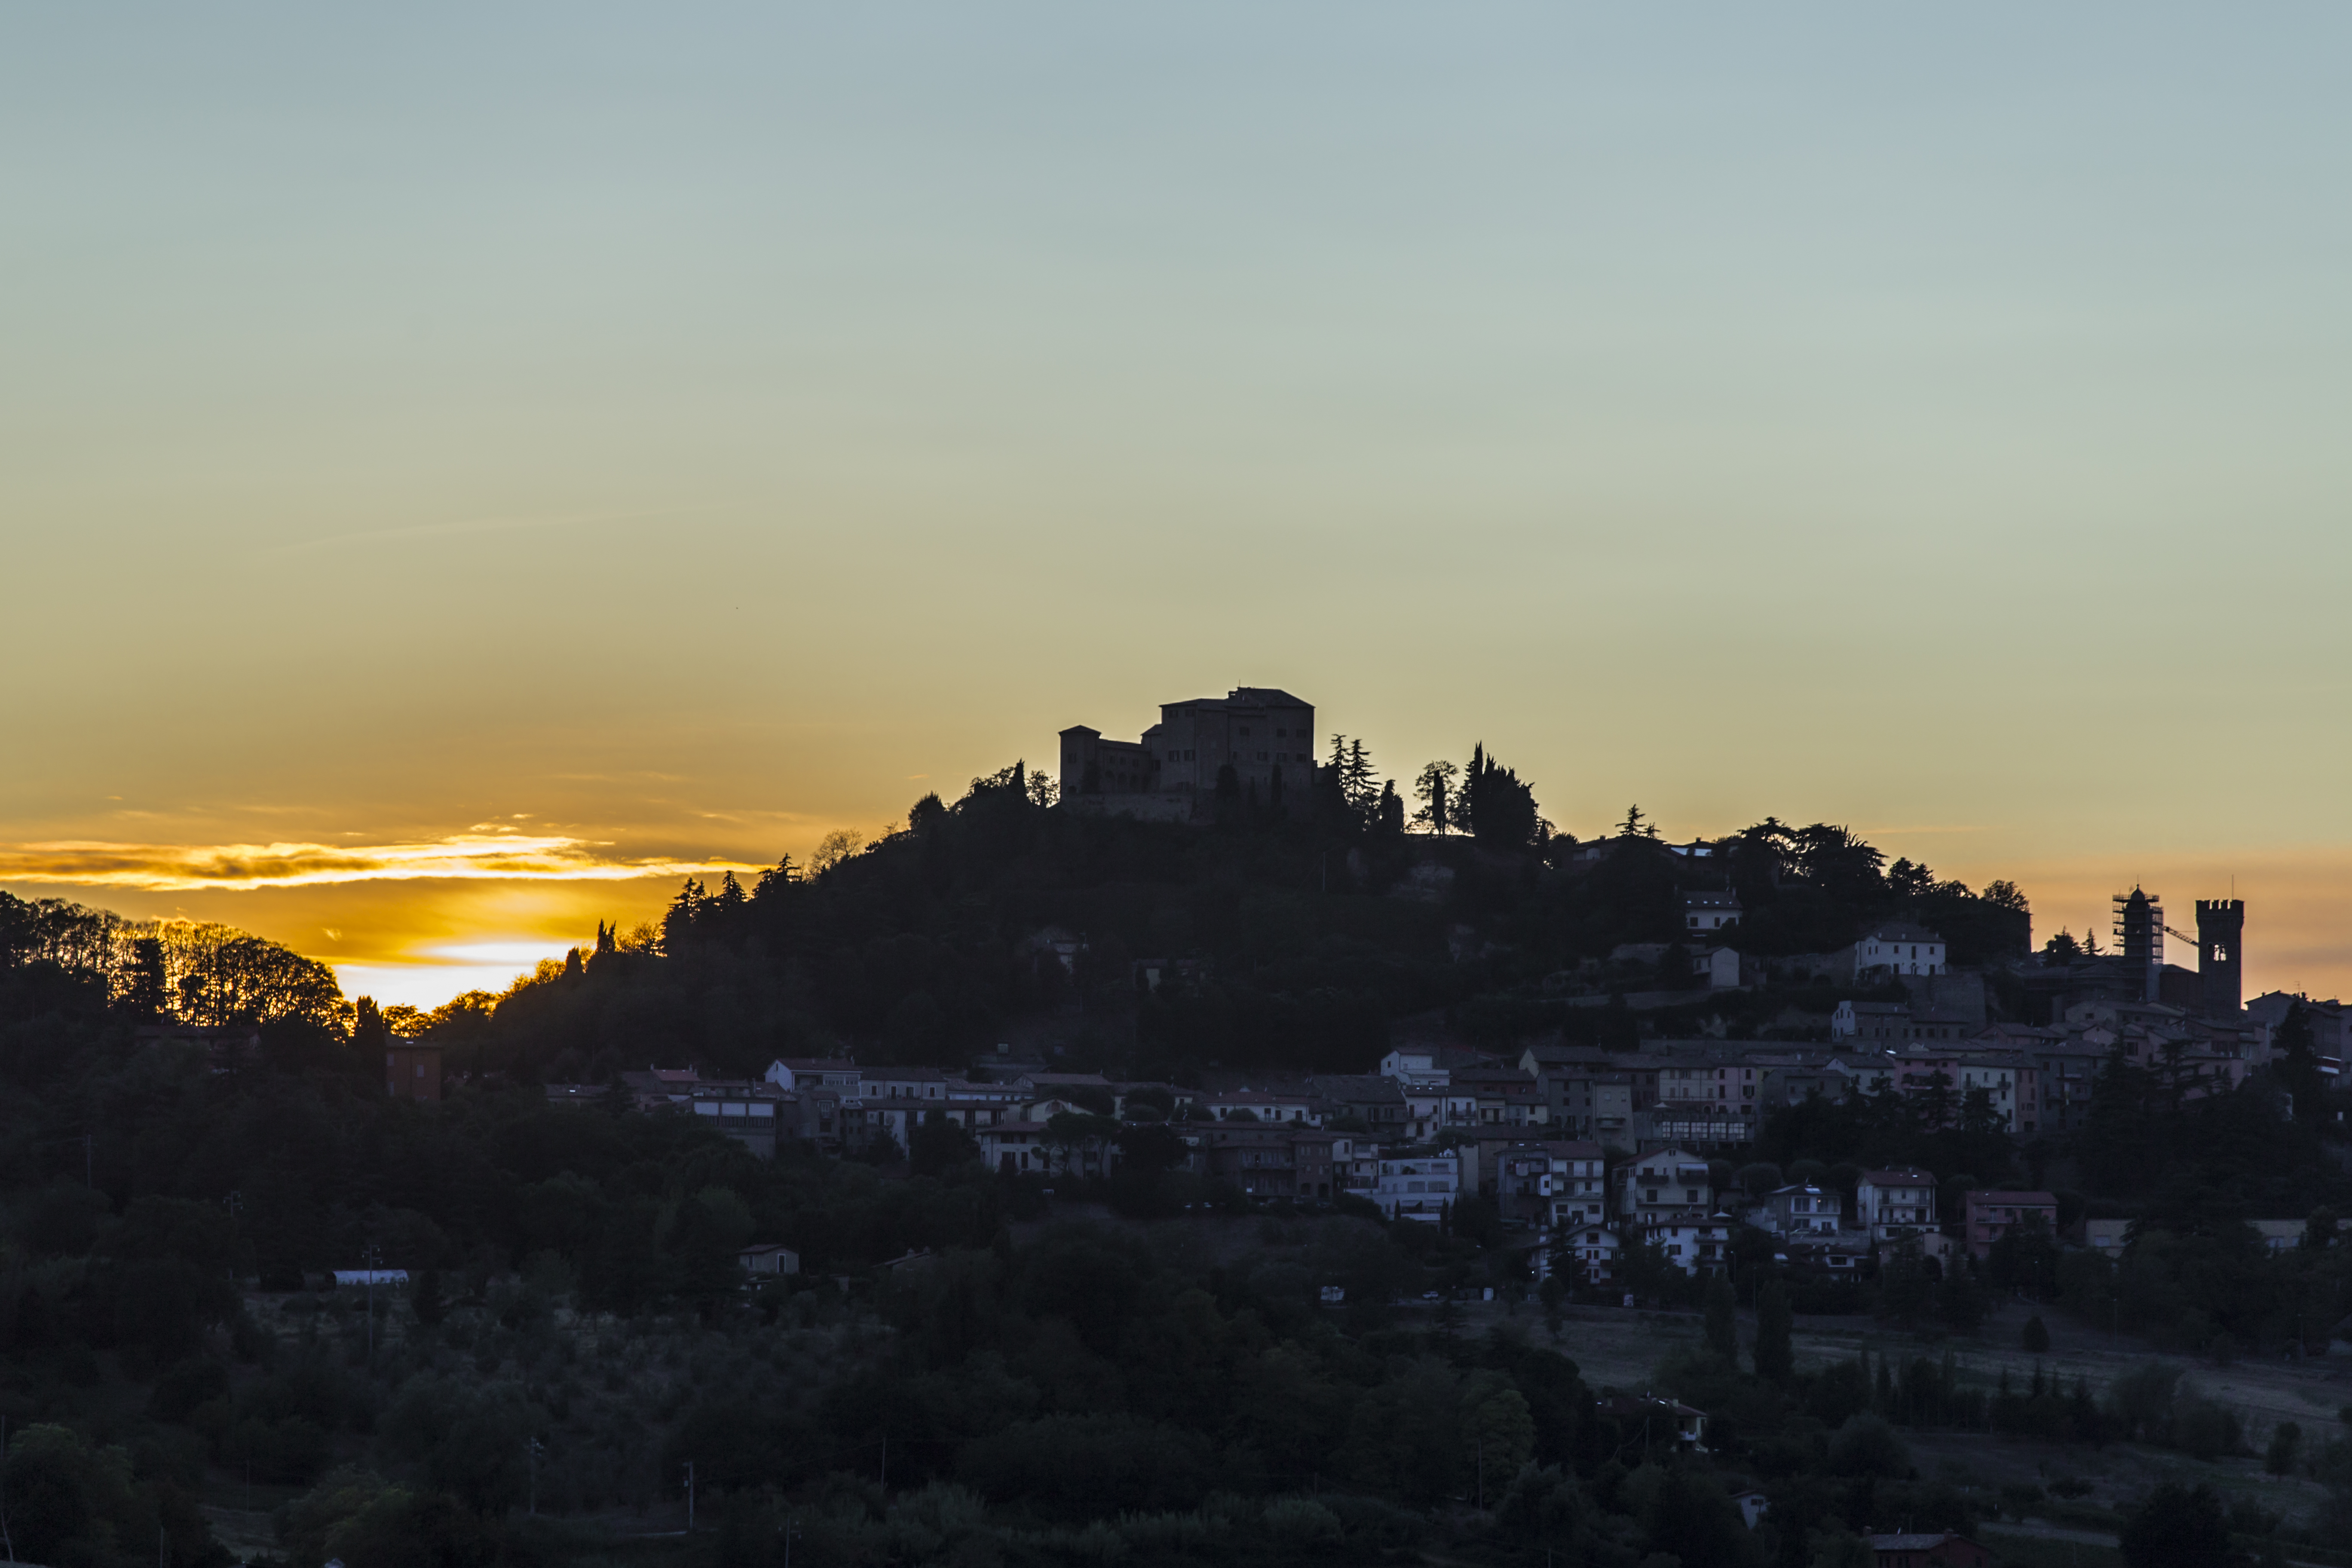 foto: https://upload.wikimedia.org/wikipedia/commons/6/66/Rocca_di_bertinoro_al_tramonto.jpg